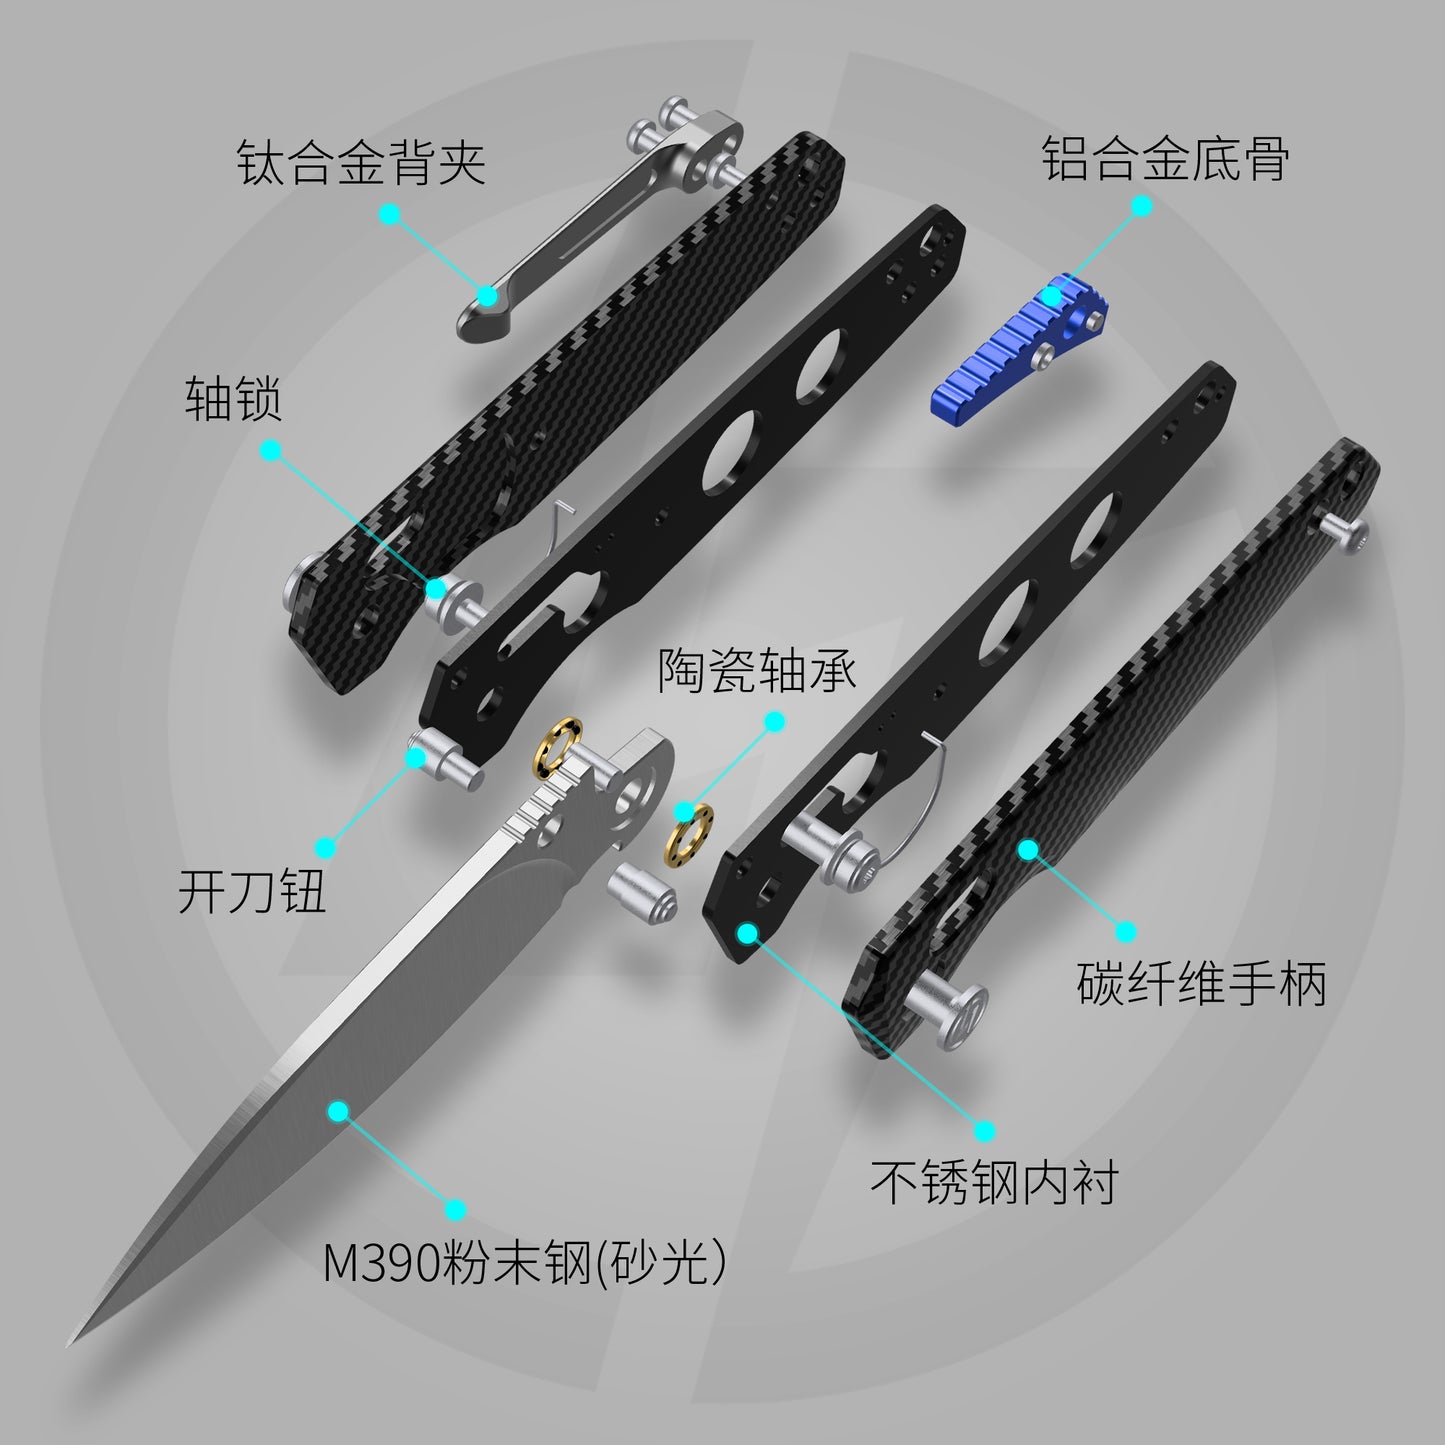 C045 Mini Folding Knife 2.6" M390 Blade White Carbon Fiber Handle, Crossbar Lock Sharp Small Folding Knife with Deep Carry Pocket Clip For EDC